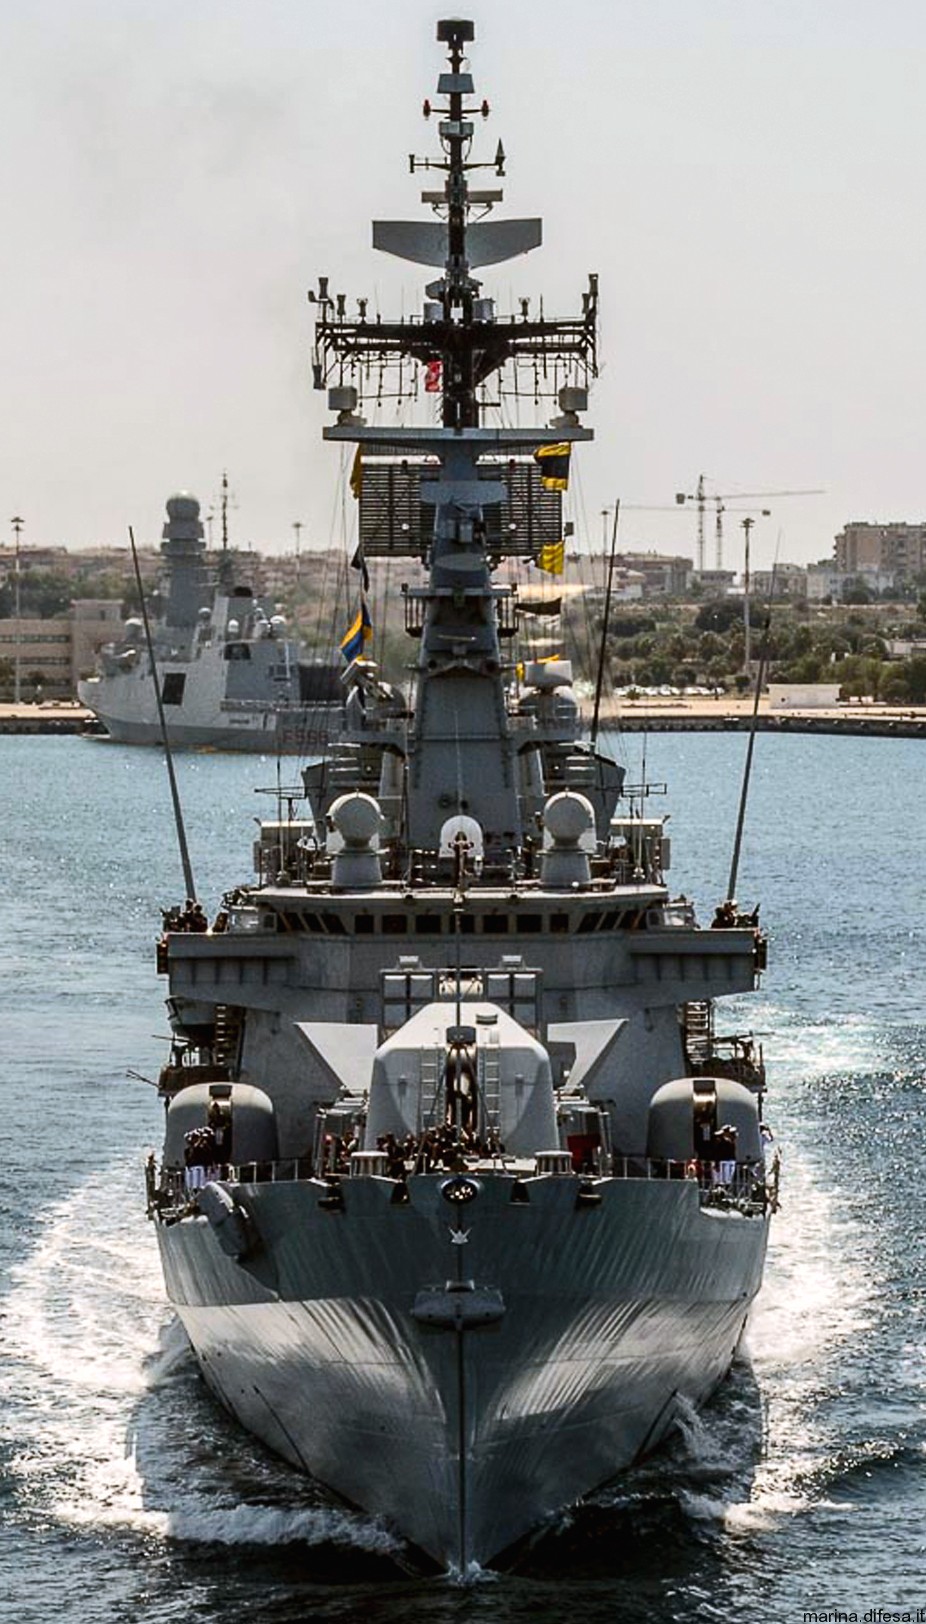 d-560 luigi durand de la penne its nave guided missile destroyer ddg italian navy marina militare 16